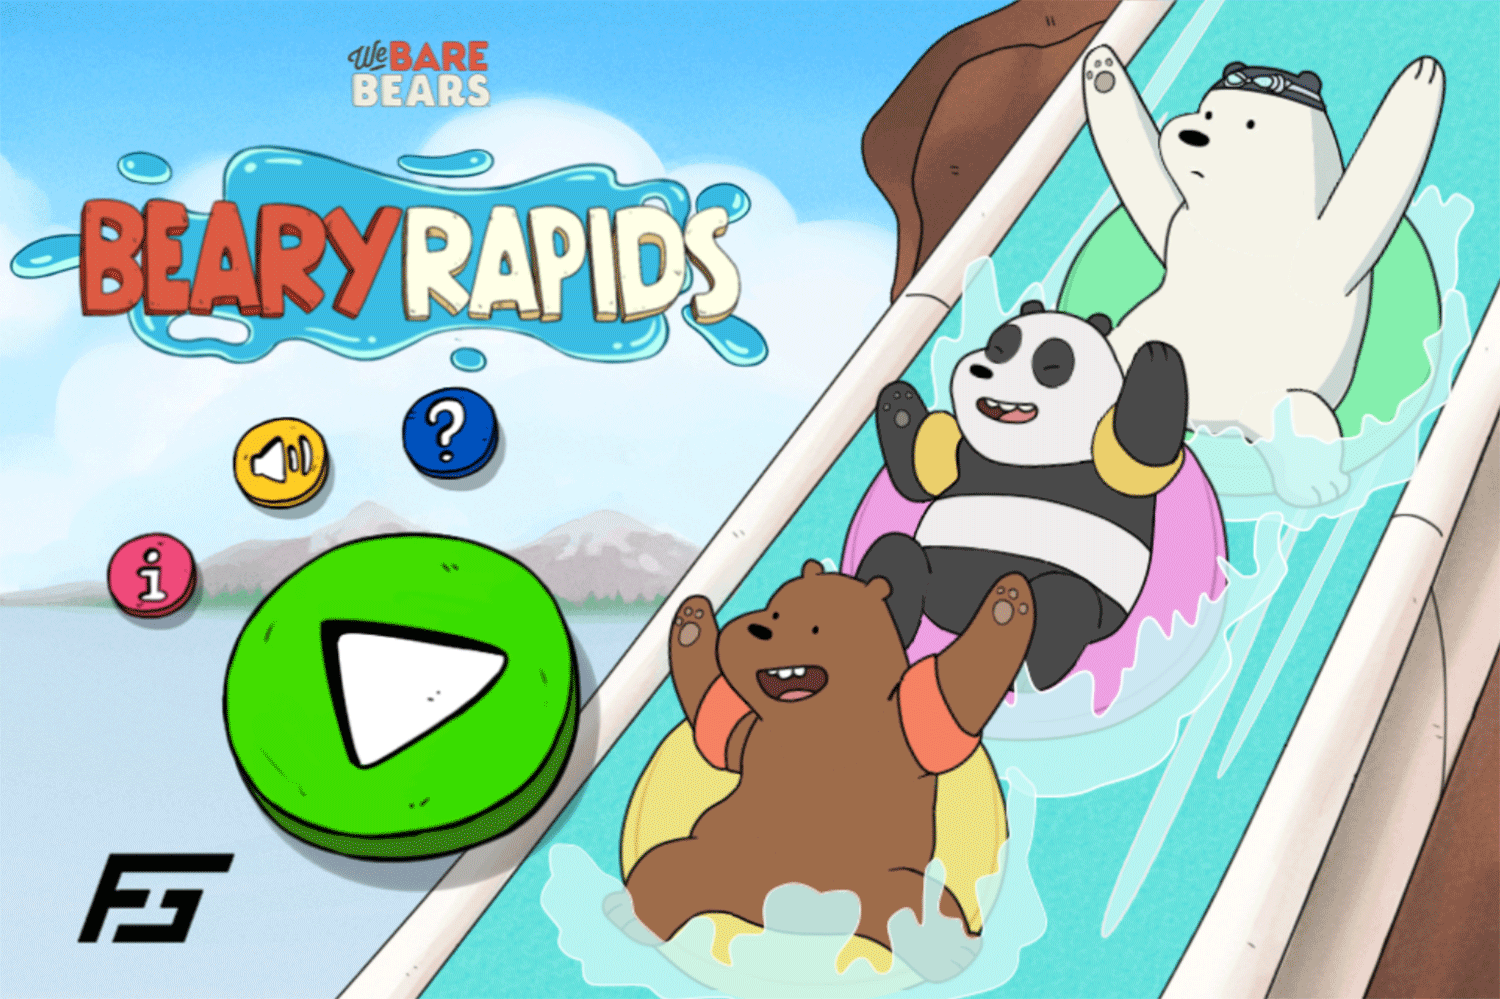 We Bare Bears Beary Rapids Welcome Screen Screenshot.